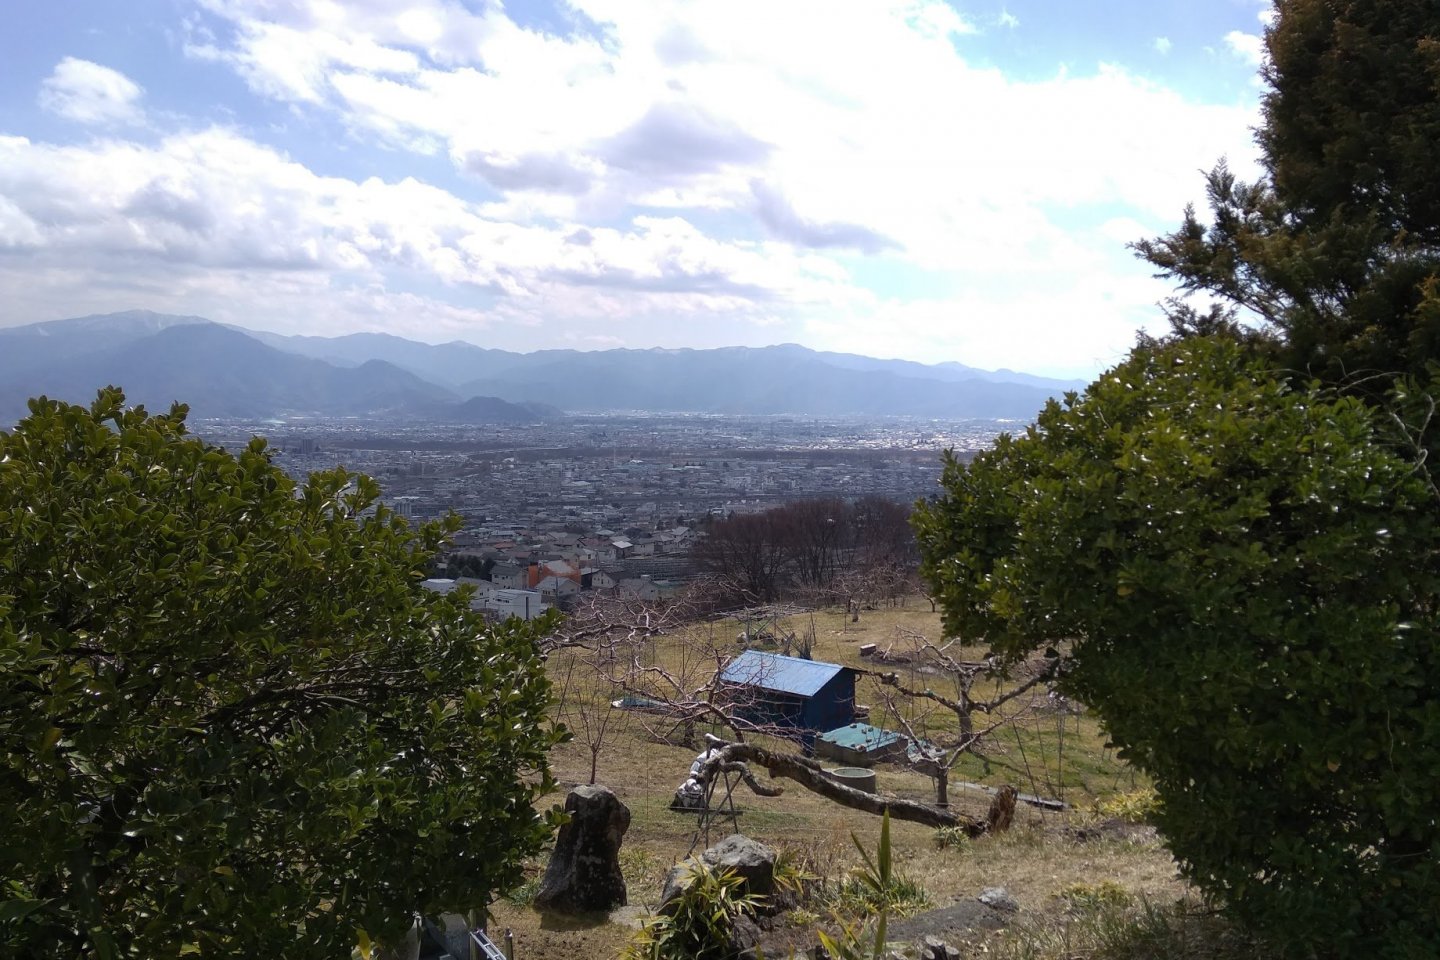 Nagano from above